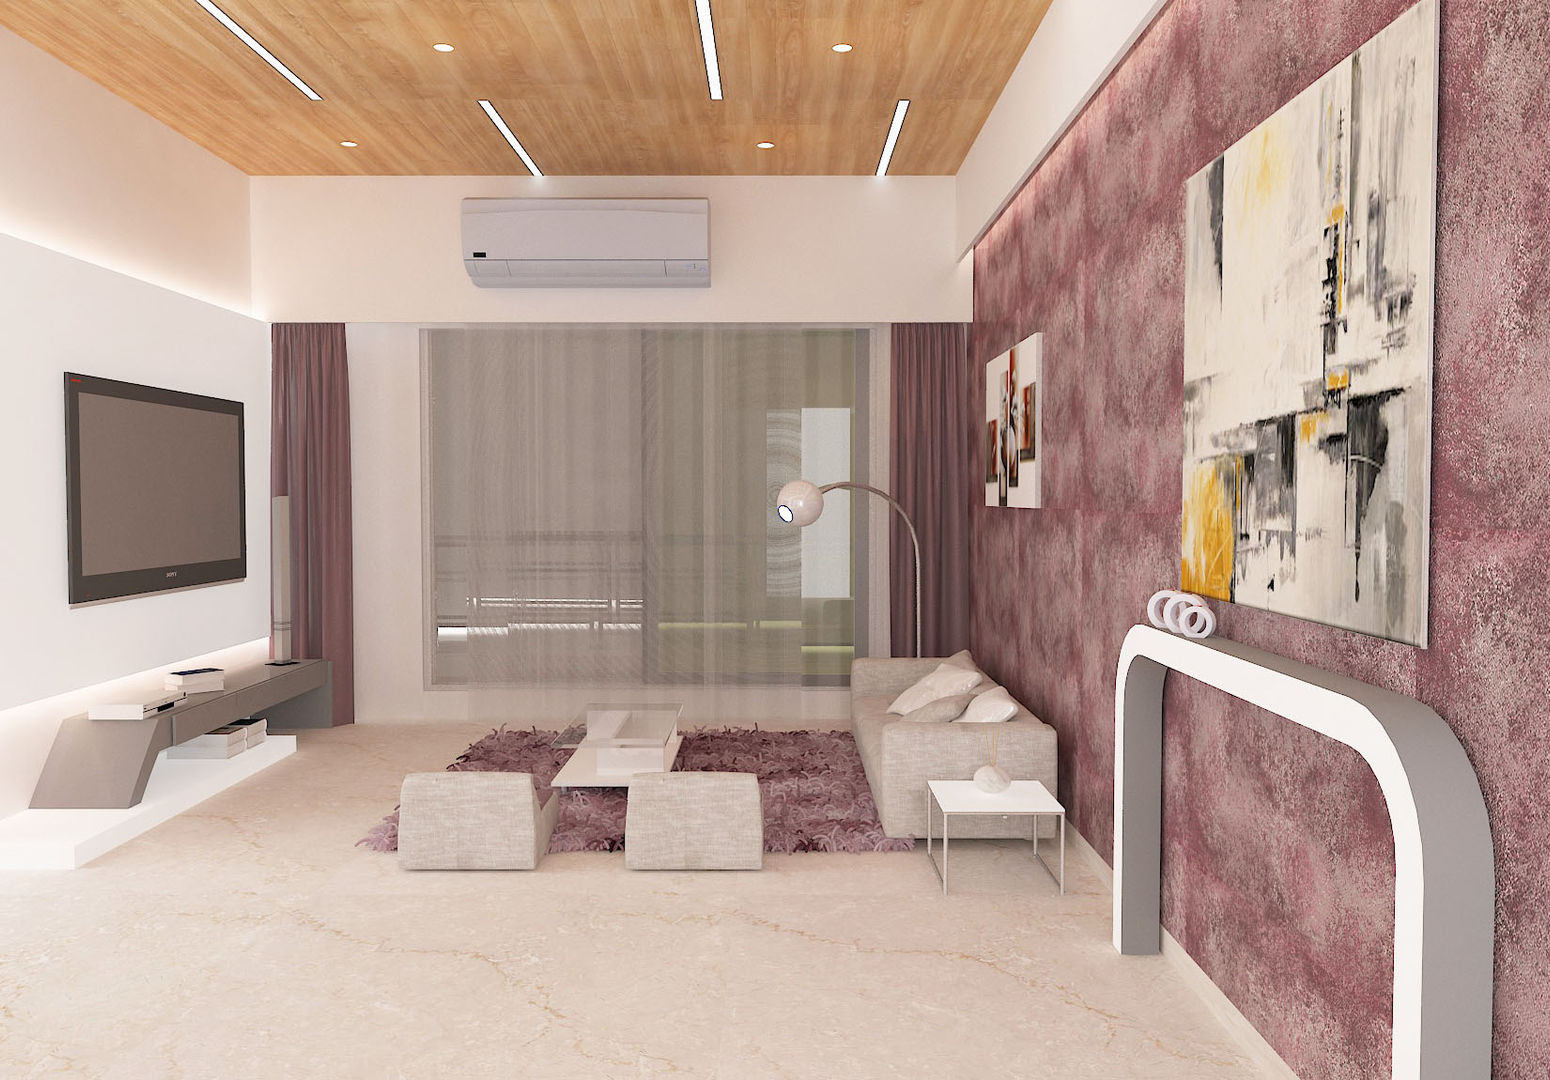 Moden Bedroom Designs Golden Spiral Productionz (p) ltd Modern style bedroom